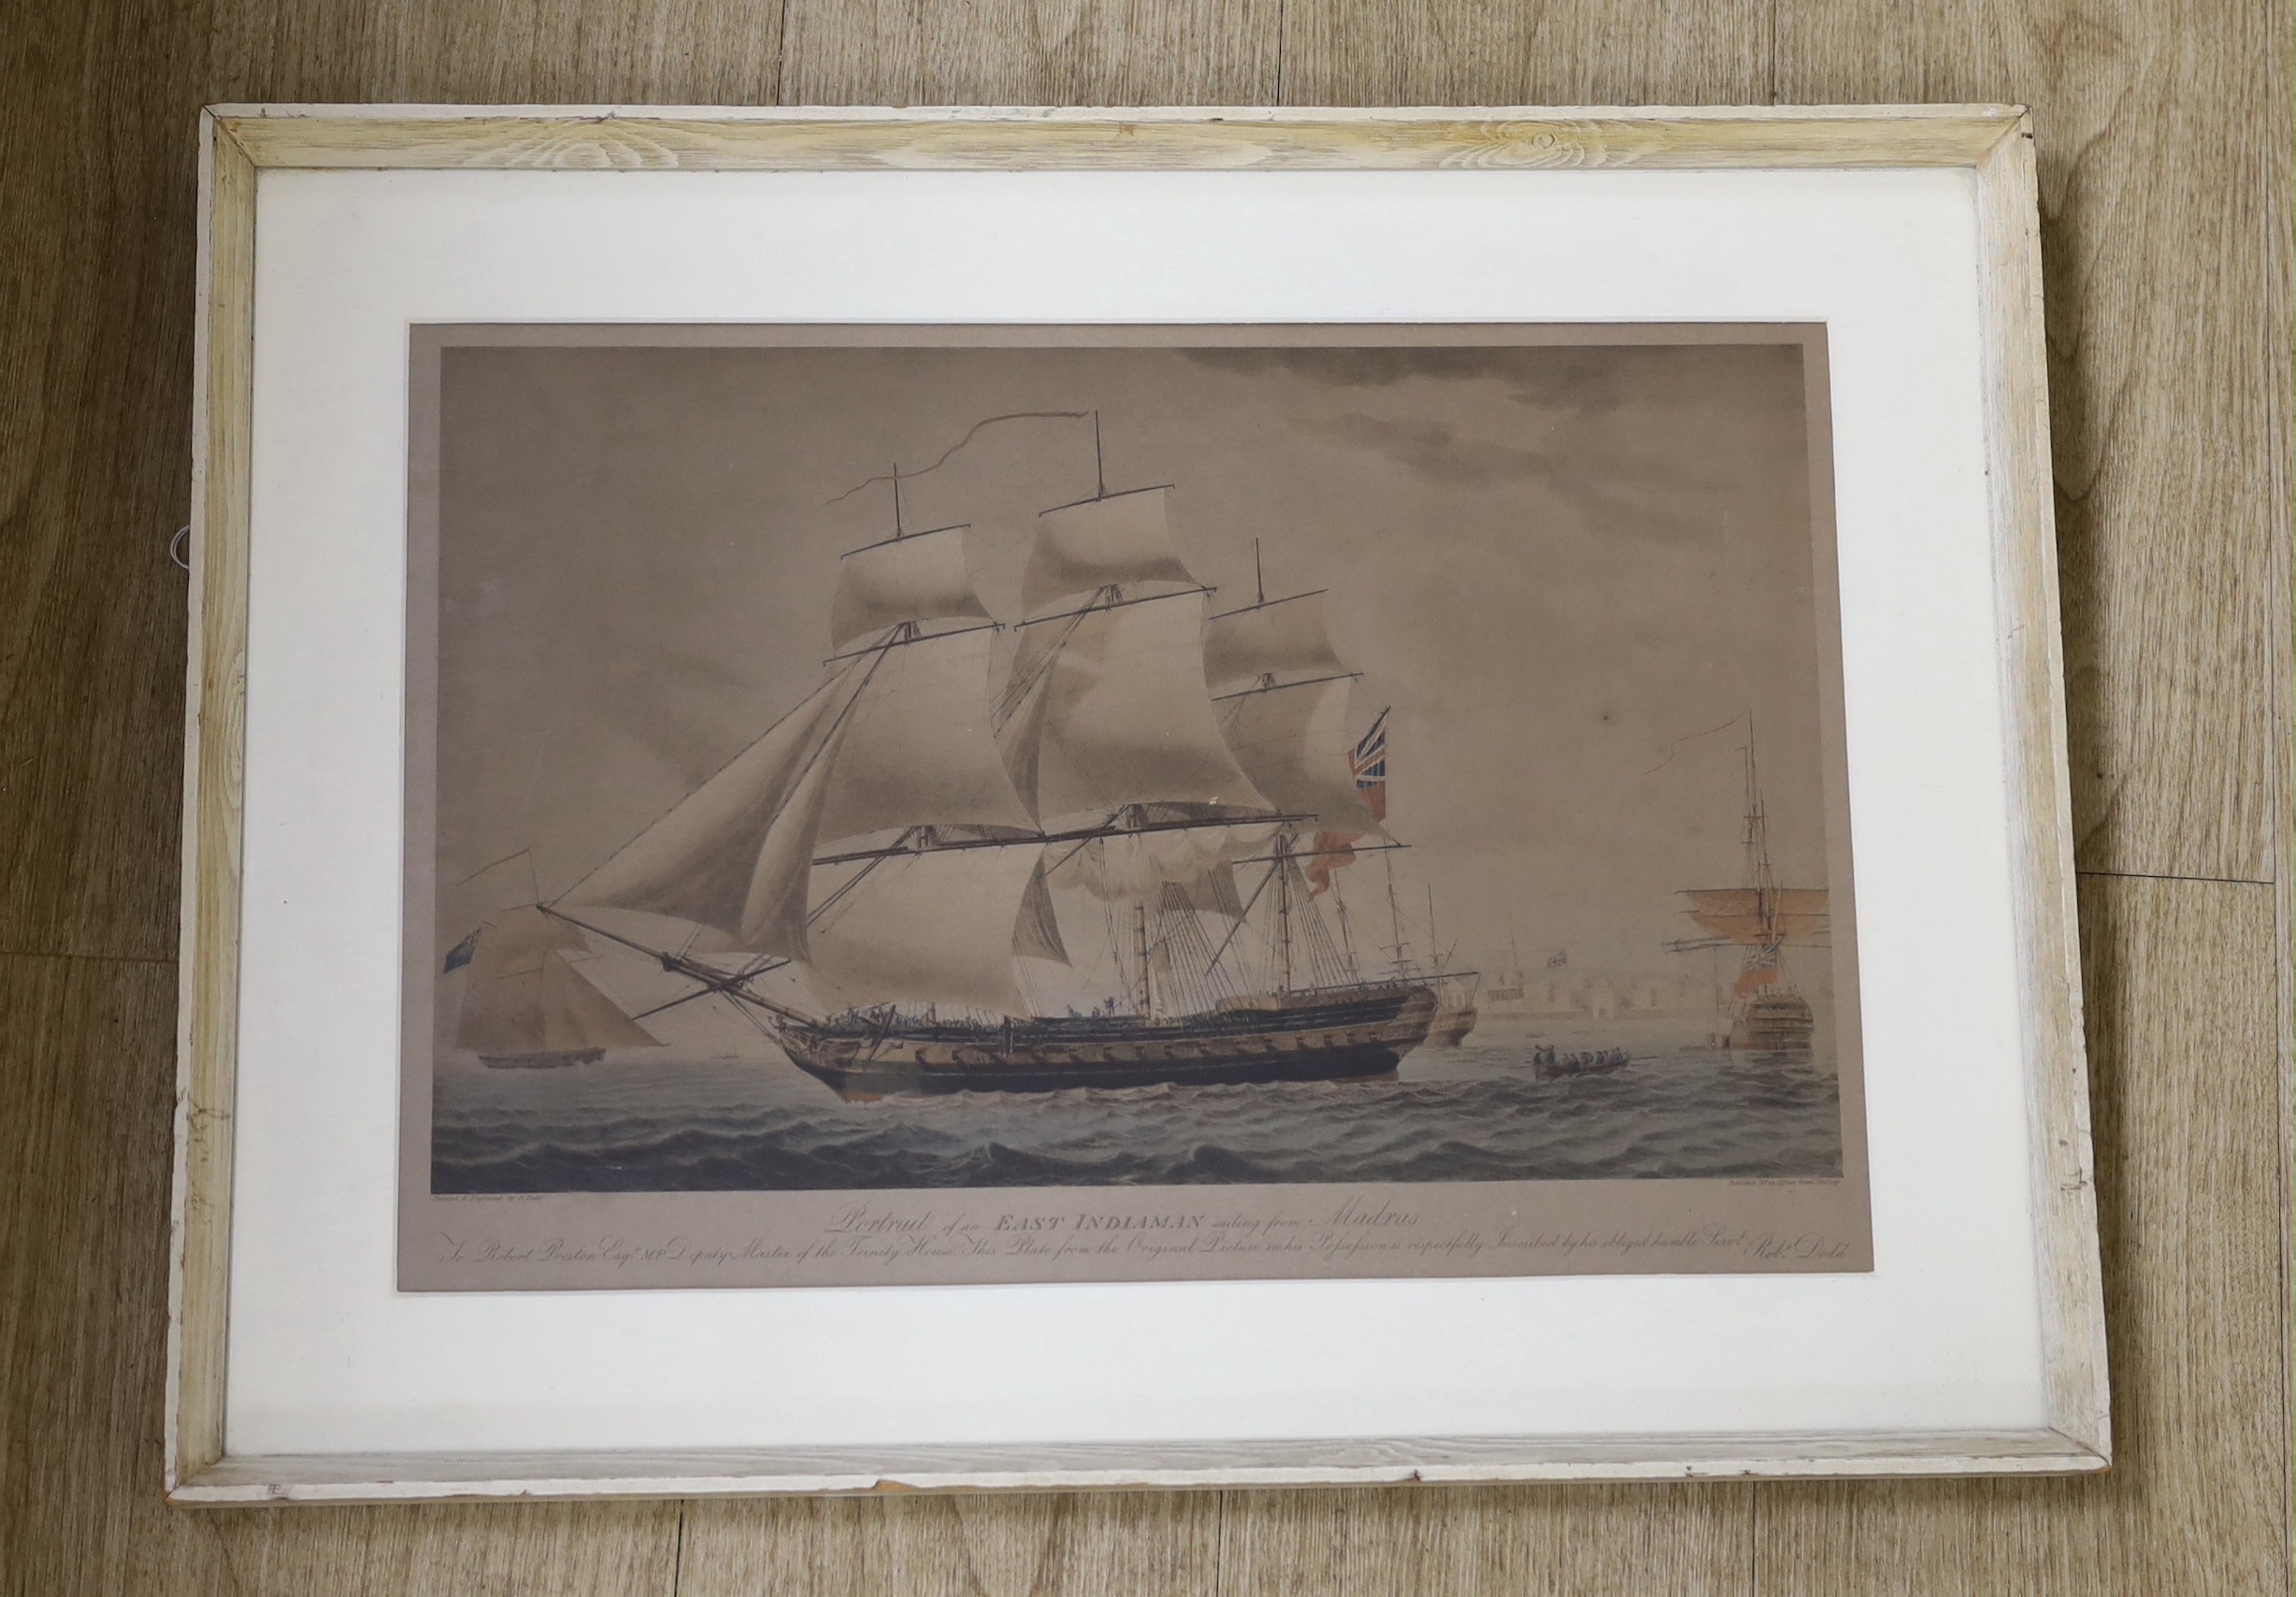 After Robert Dodd, colour reprint, 'An East Indiaman sailing from Madras 1797, 33 x 50cm